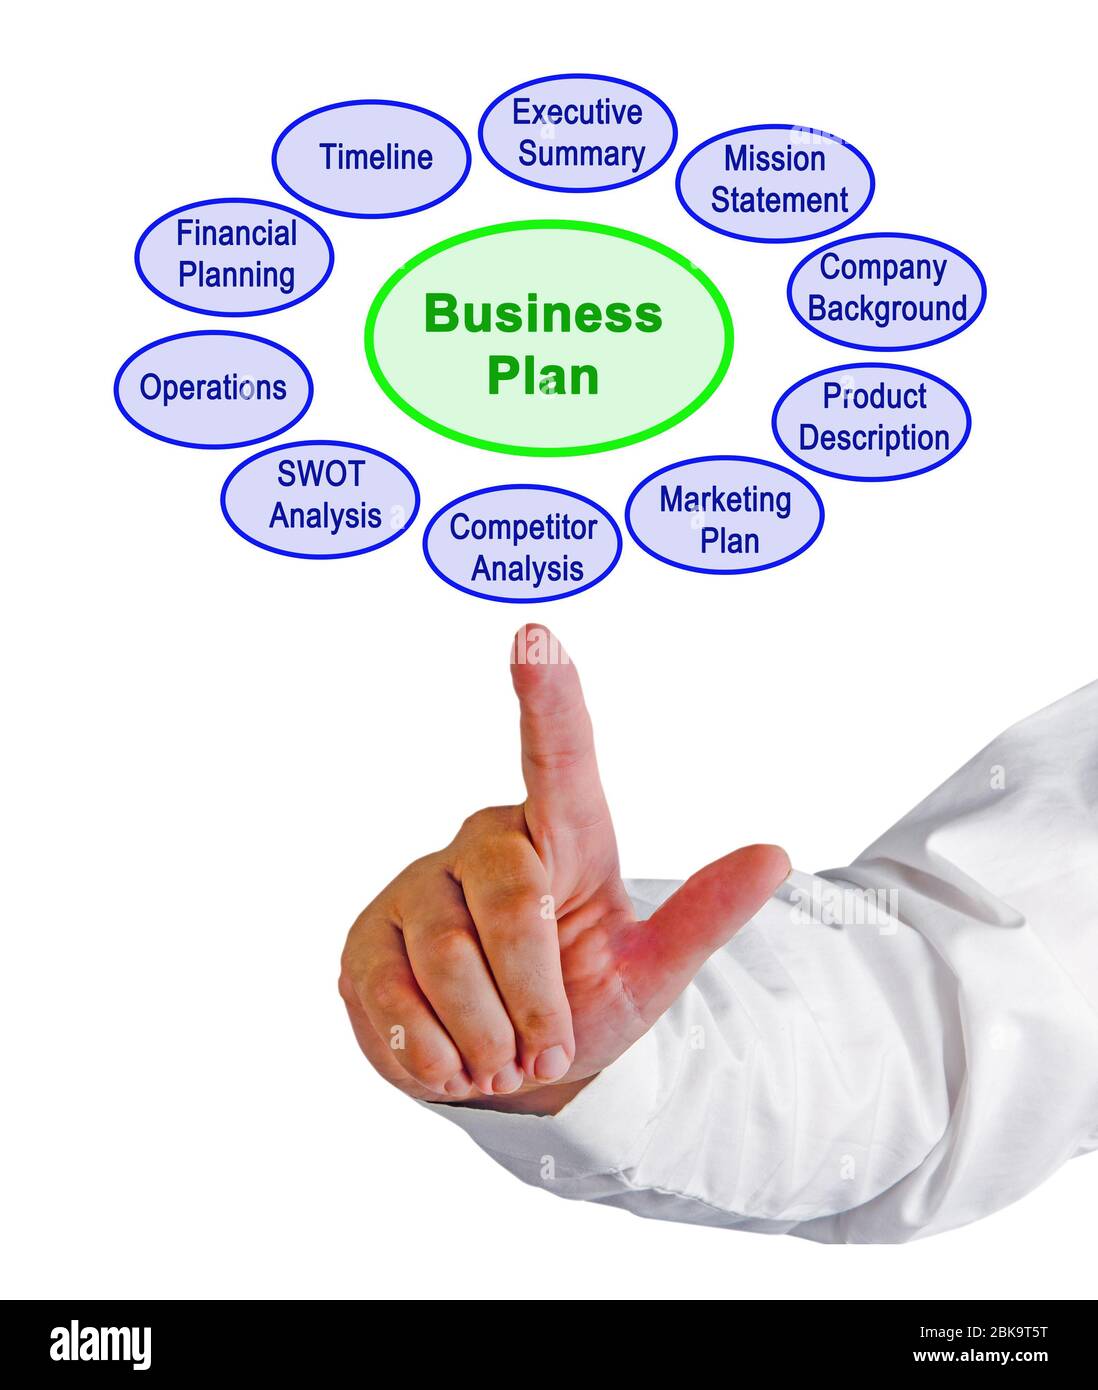 ten elements of business plan